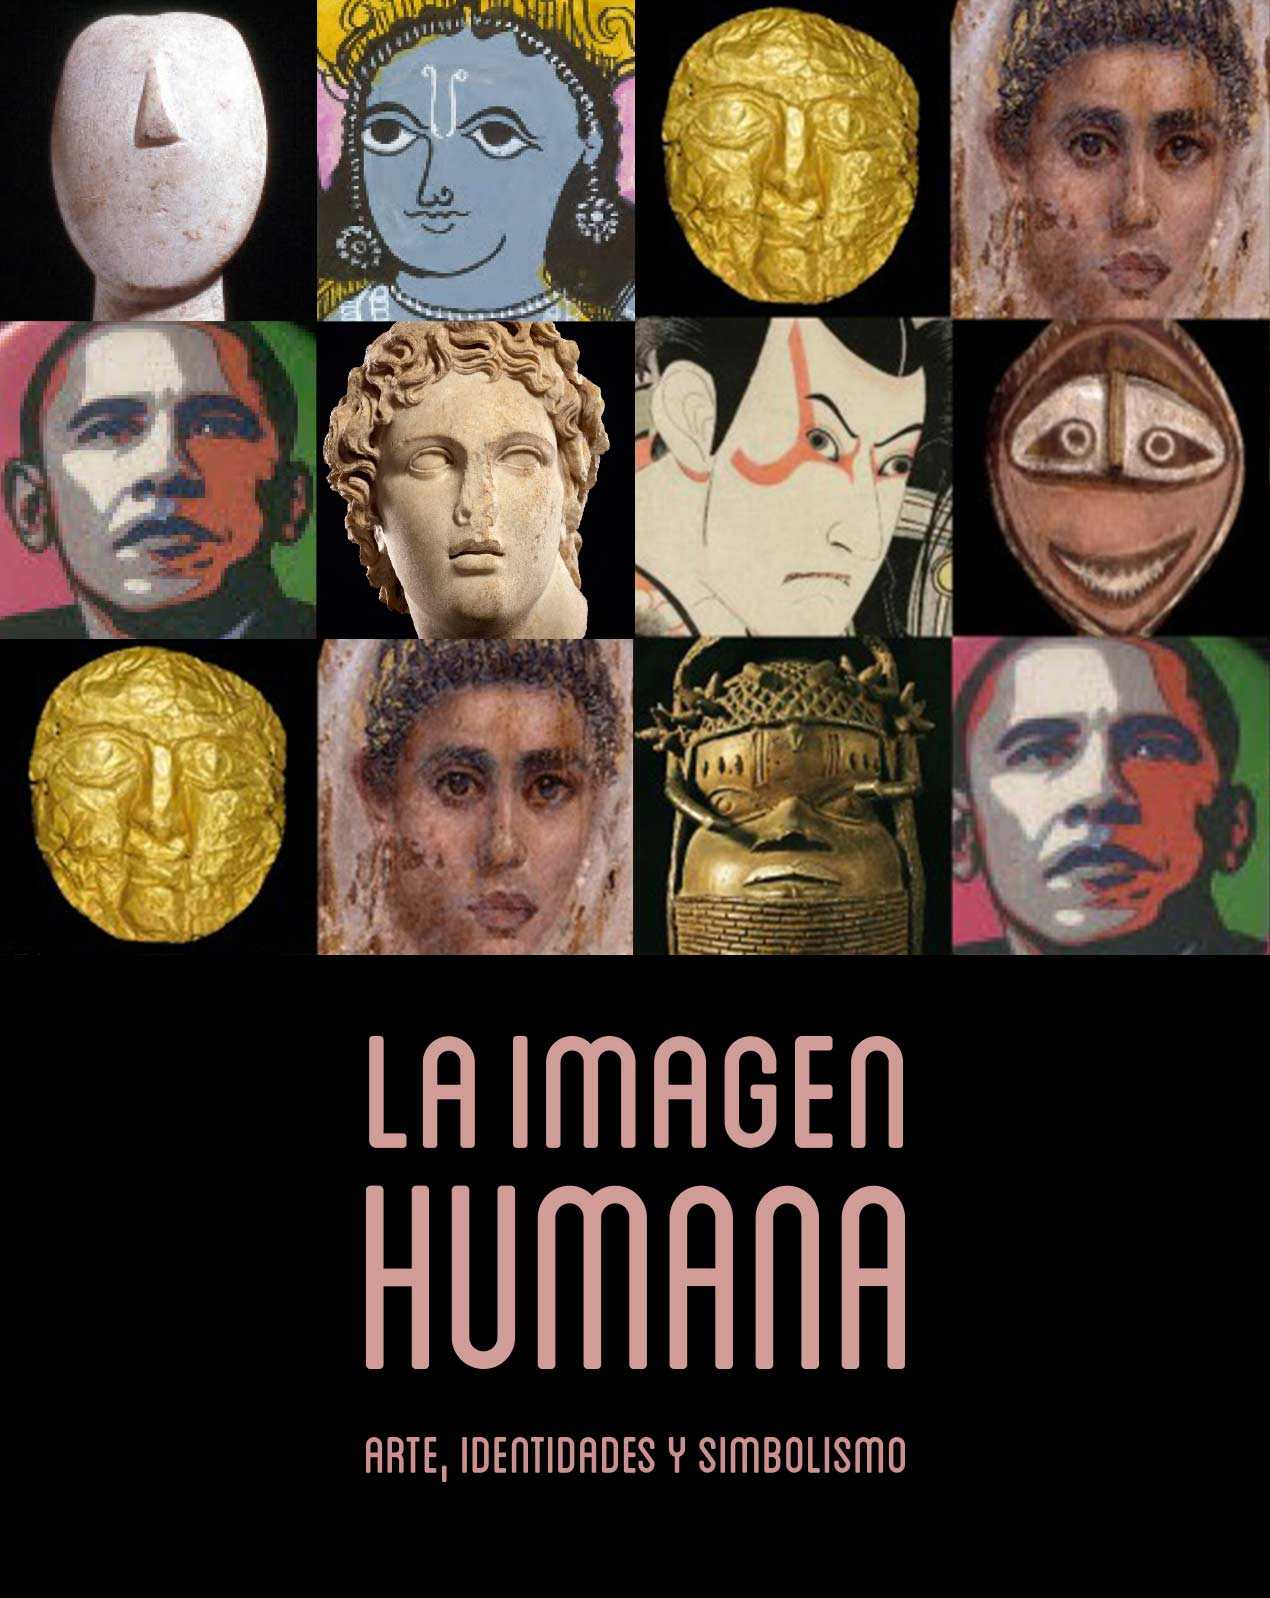 The Human Image: Art, Identities and Symbolism, Exhibition, CaixaForum Madrid, 29 April - 29 August 2021.